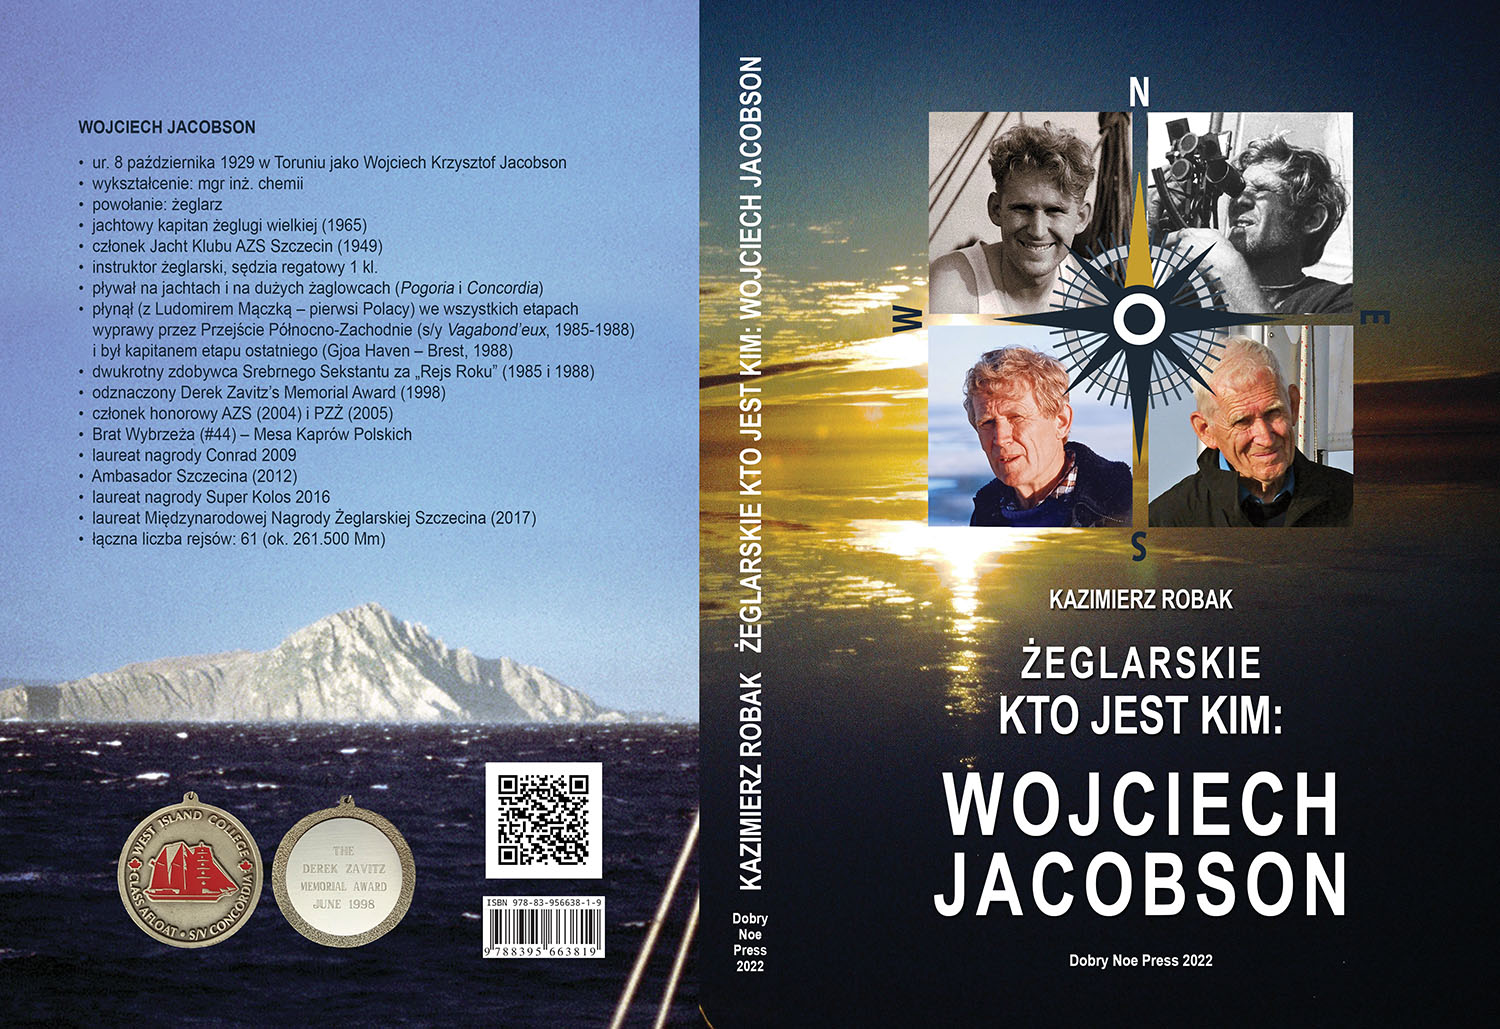 Okładka W.Jacobson - 2022 - autor K. Robak